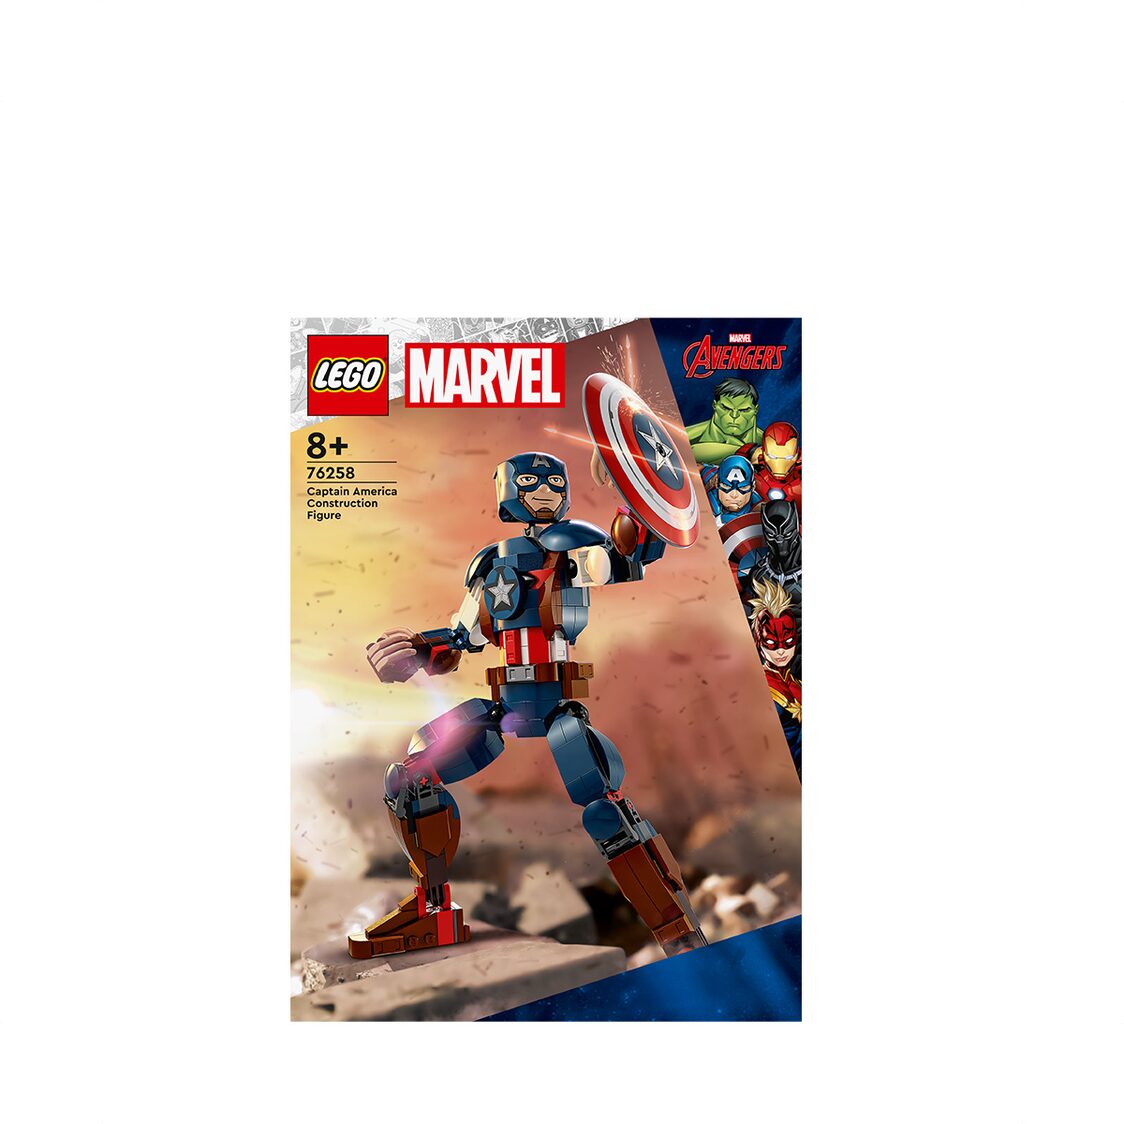 Lego 76258 Marvel Captain America Construction Figure